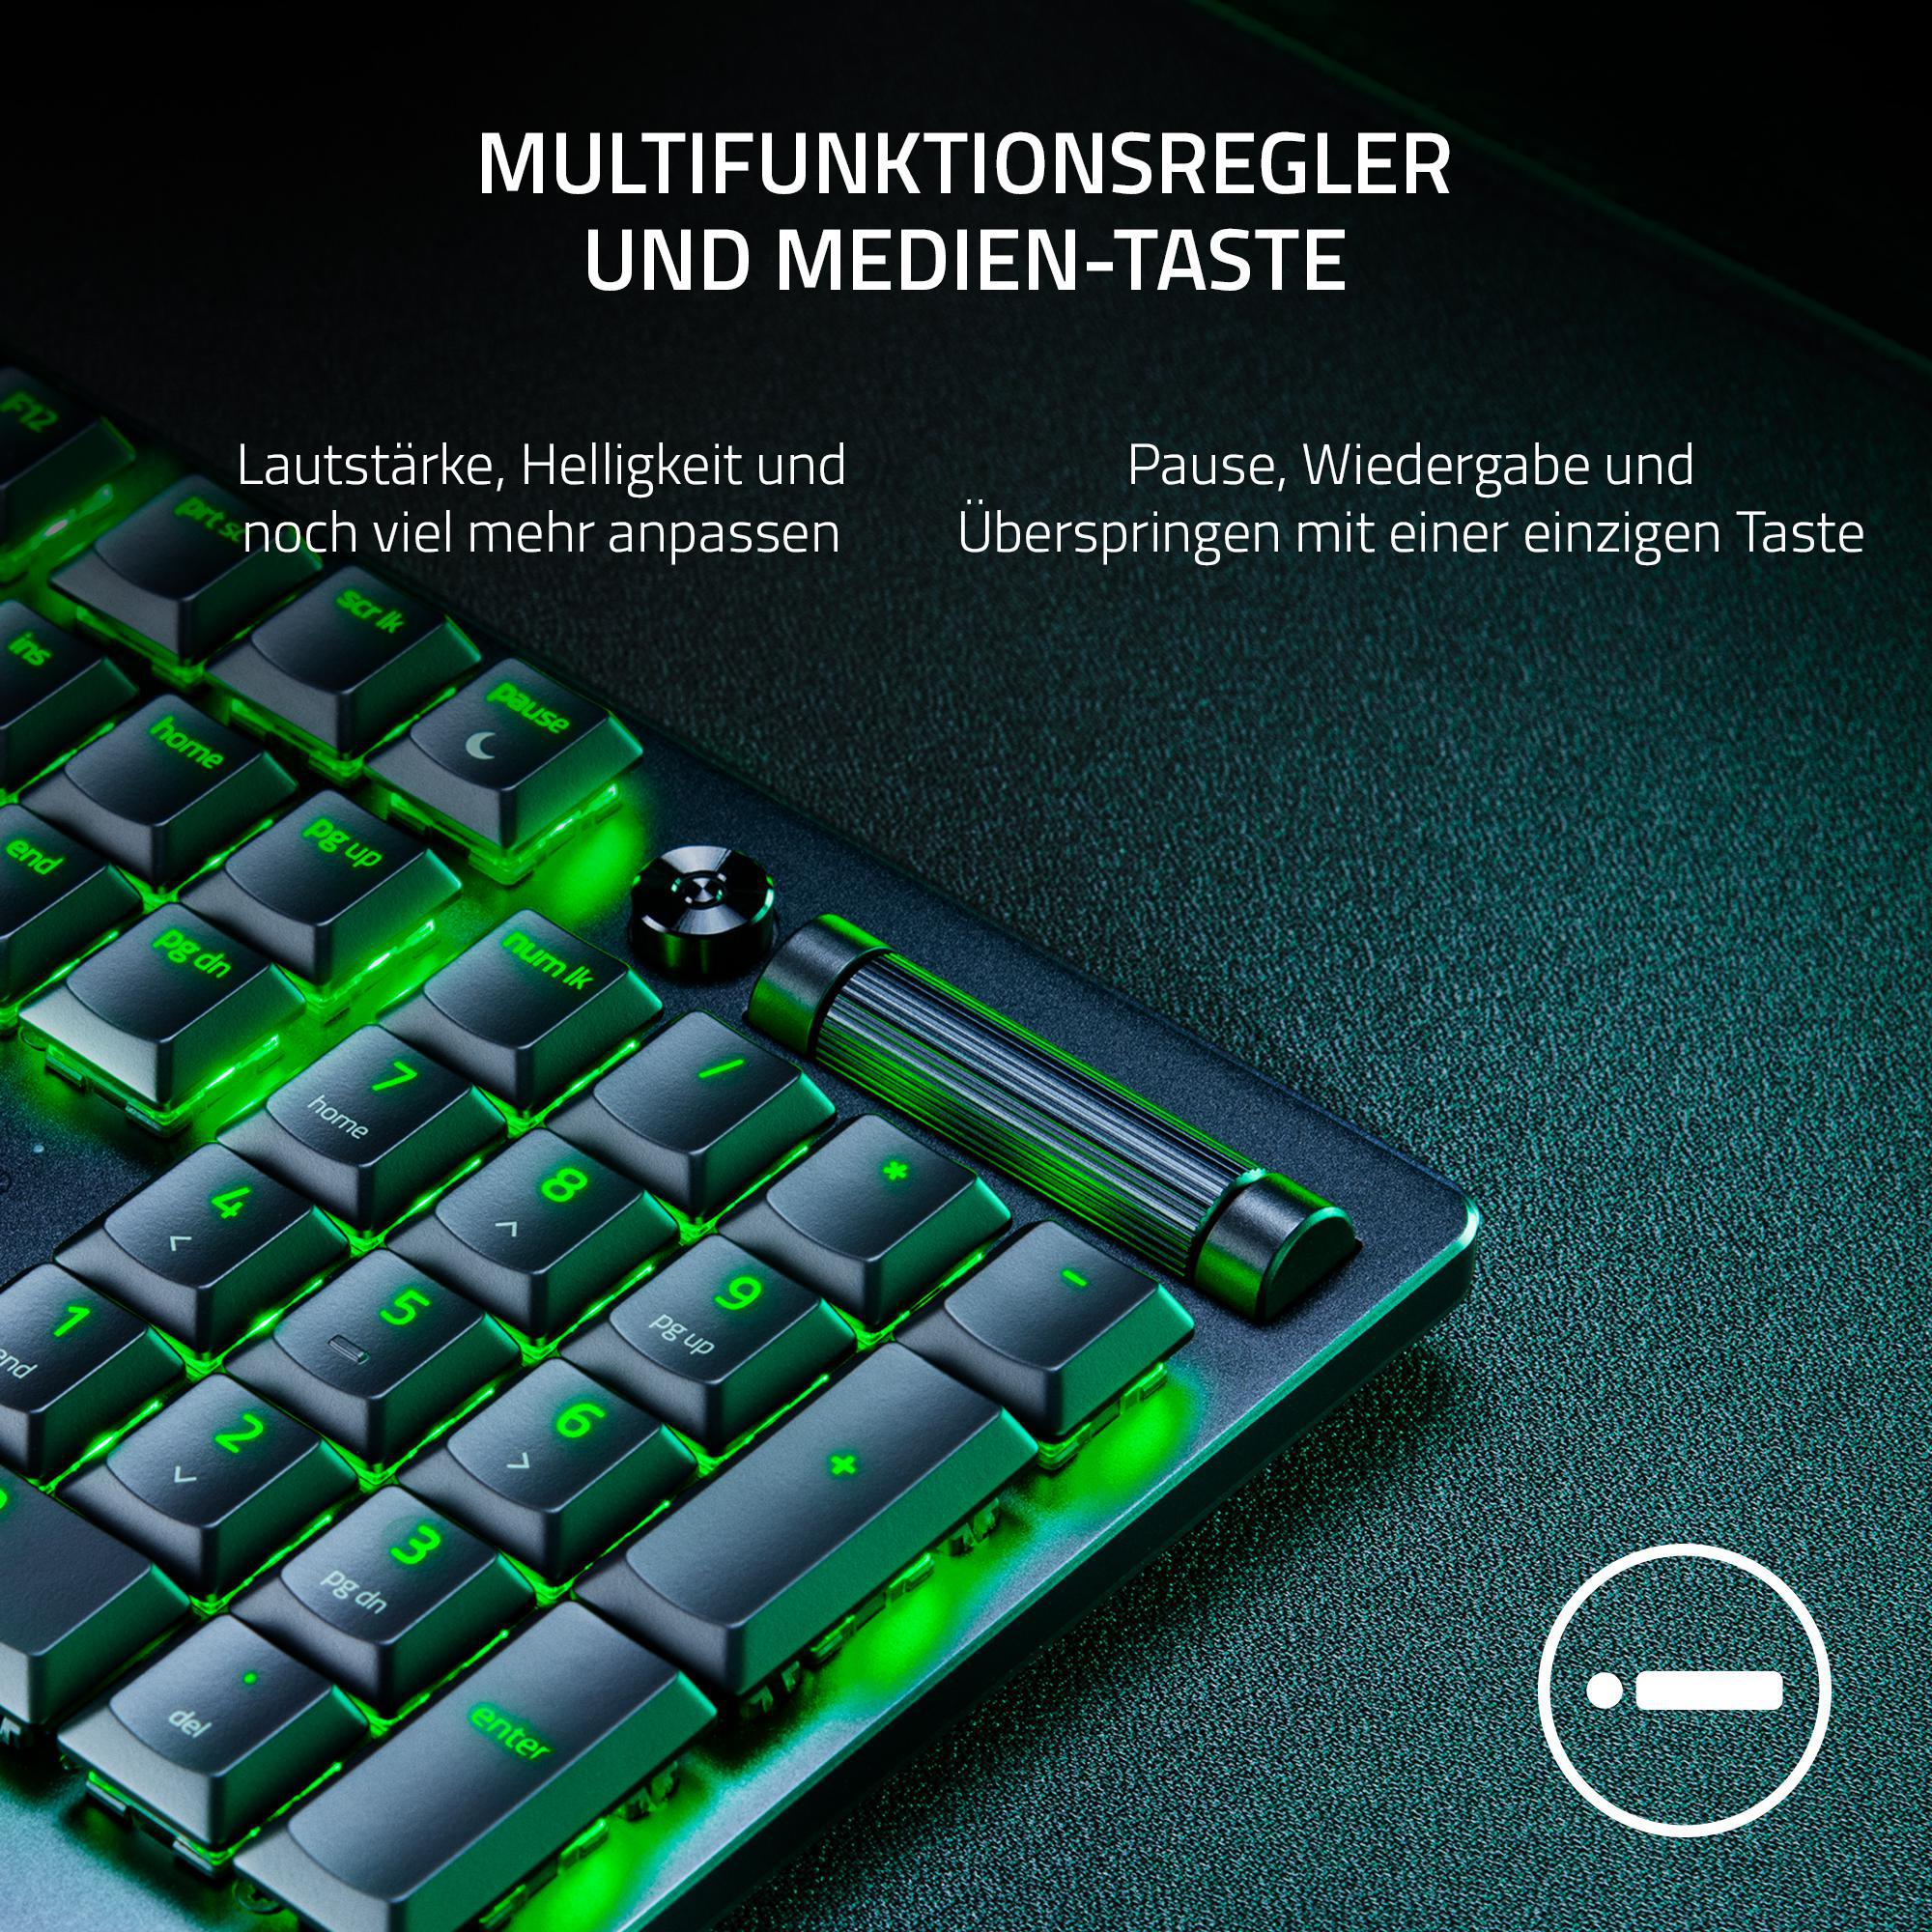 RAZER DeathStalker V2, Gaming Kabelgebunden, (Rot), Razer Tastatur, Switch Optical Opto-Mechanical, Linear Schwarz